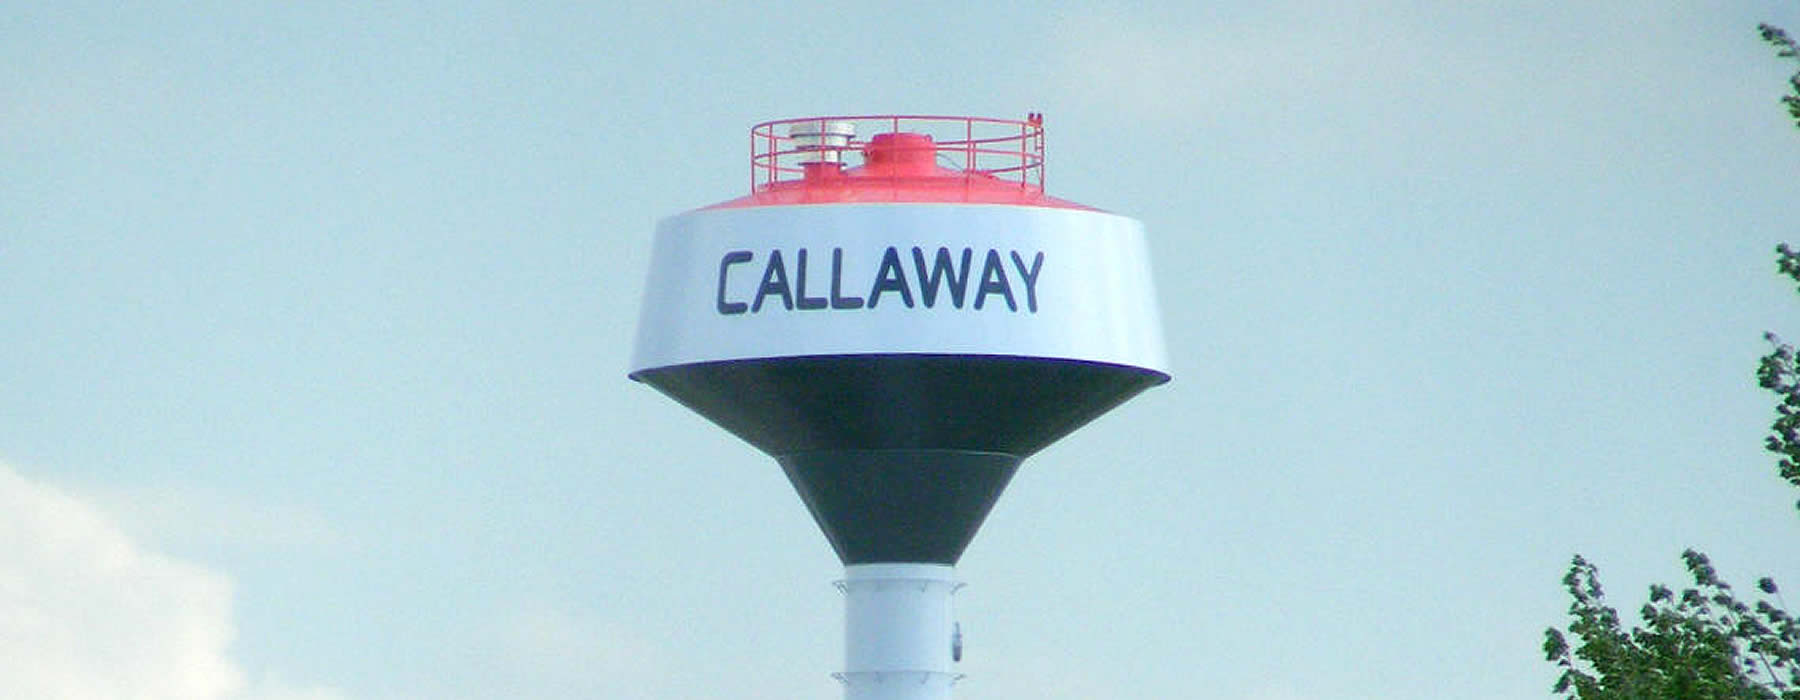 Callaway, Minnesota water tower